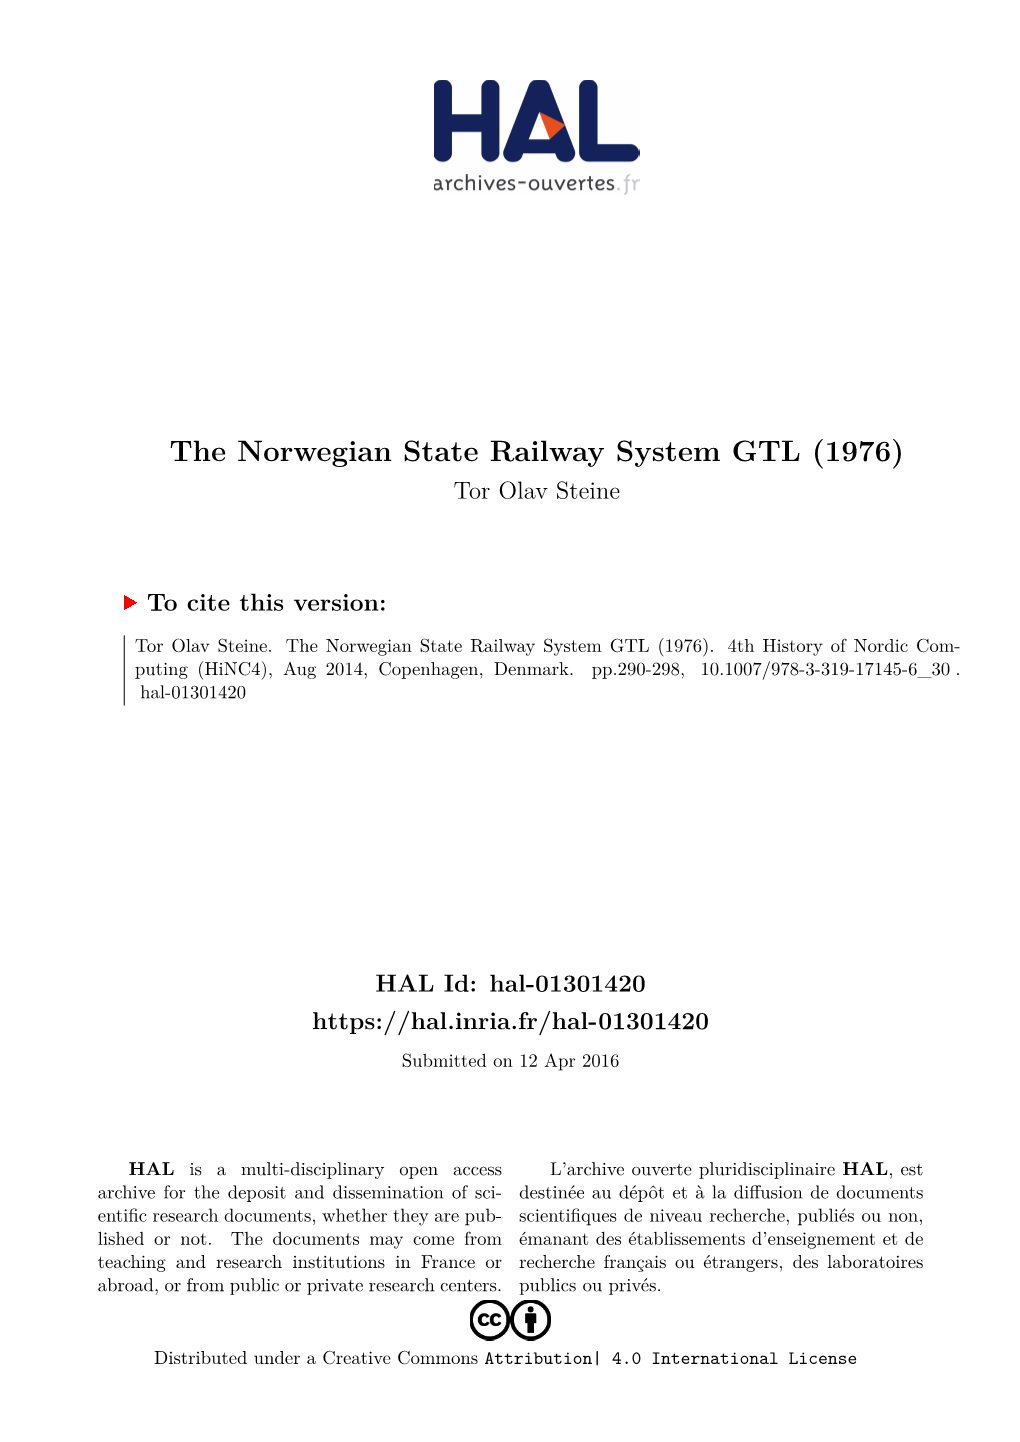 The Norwegian State Railway System GTL (1976) Tor Olav Steine